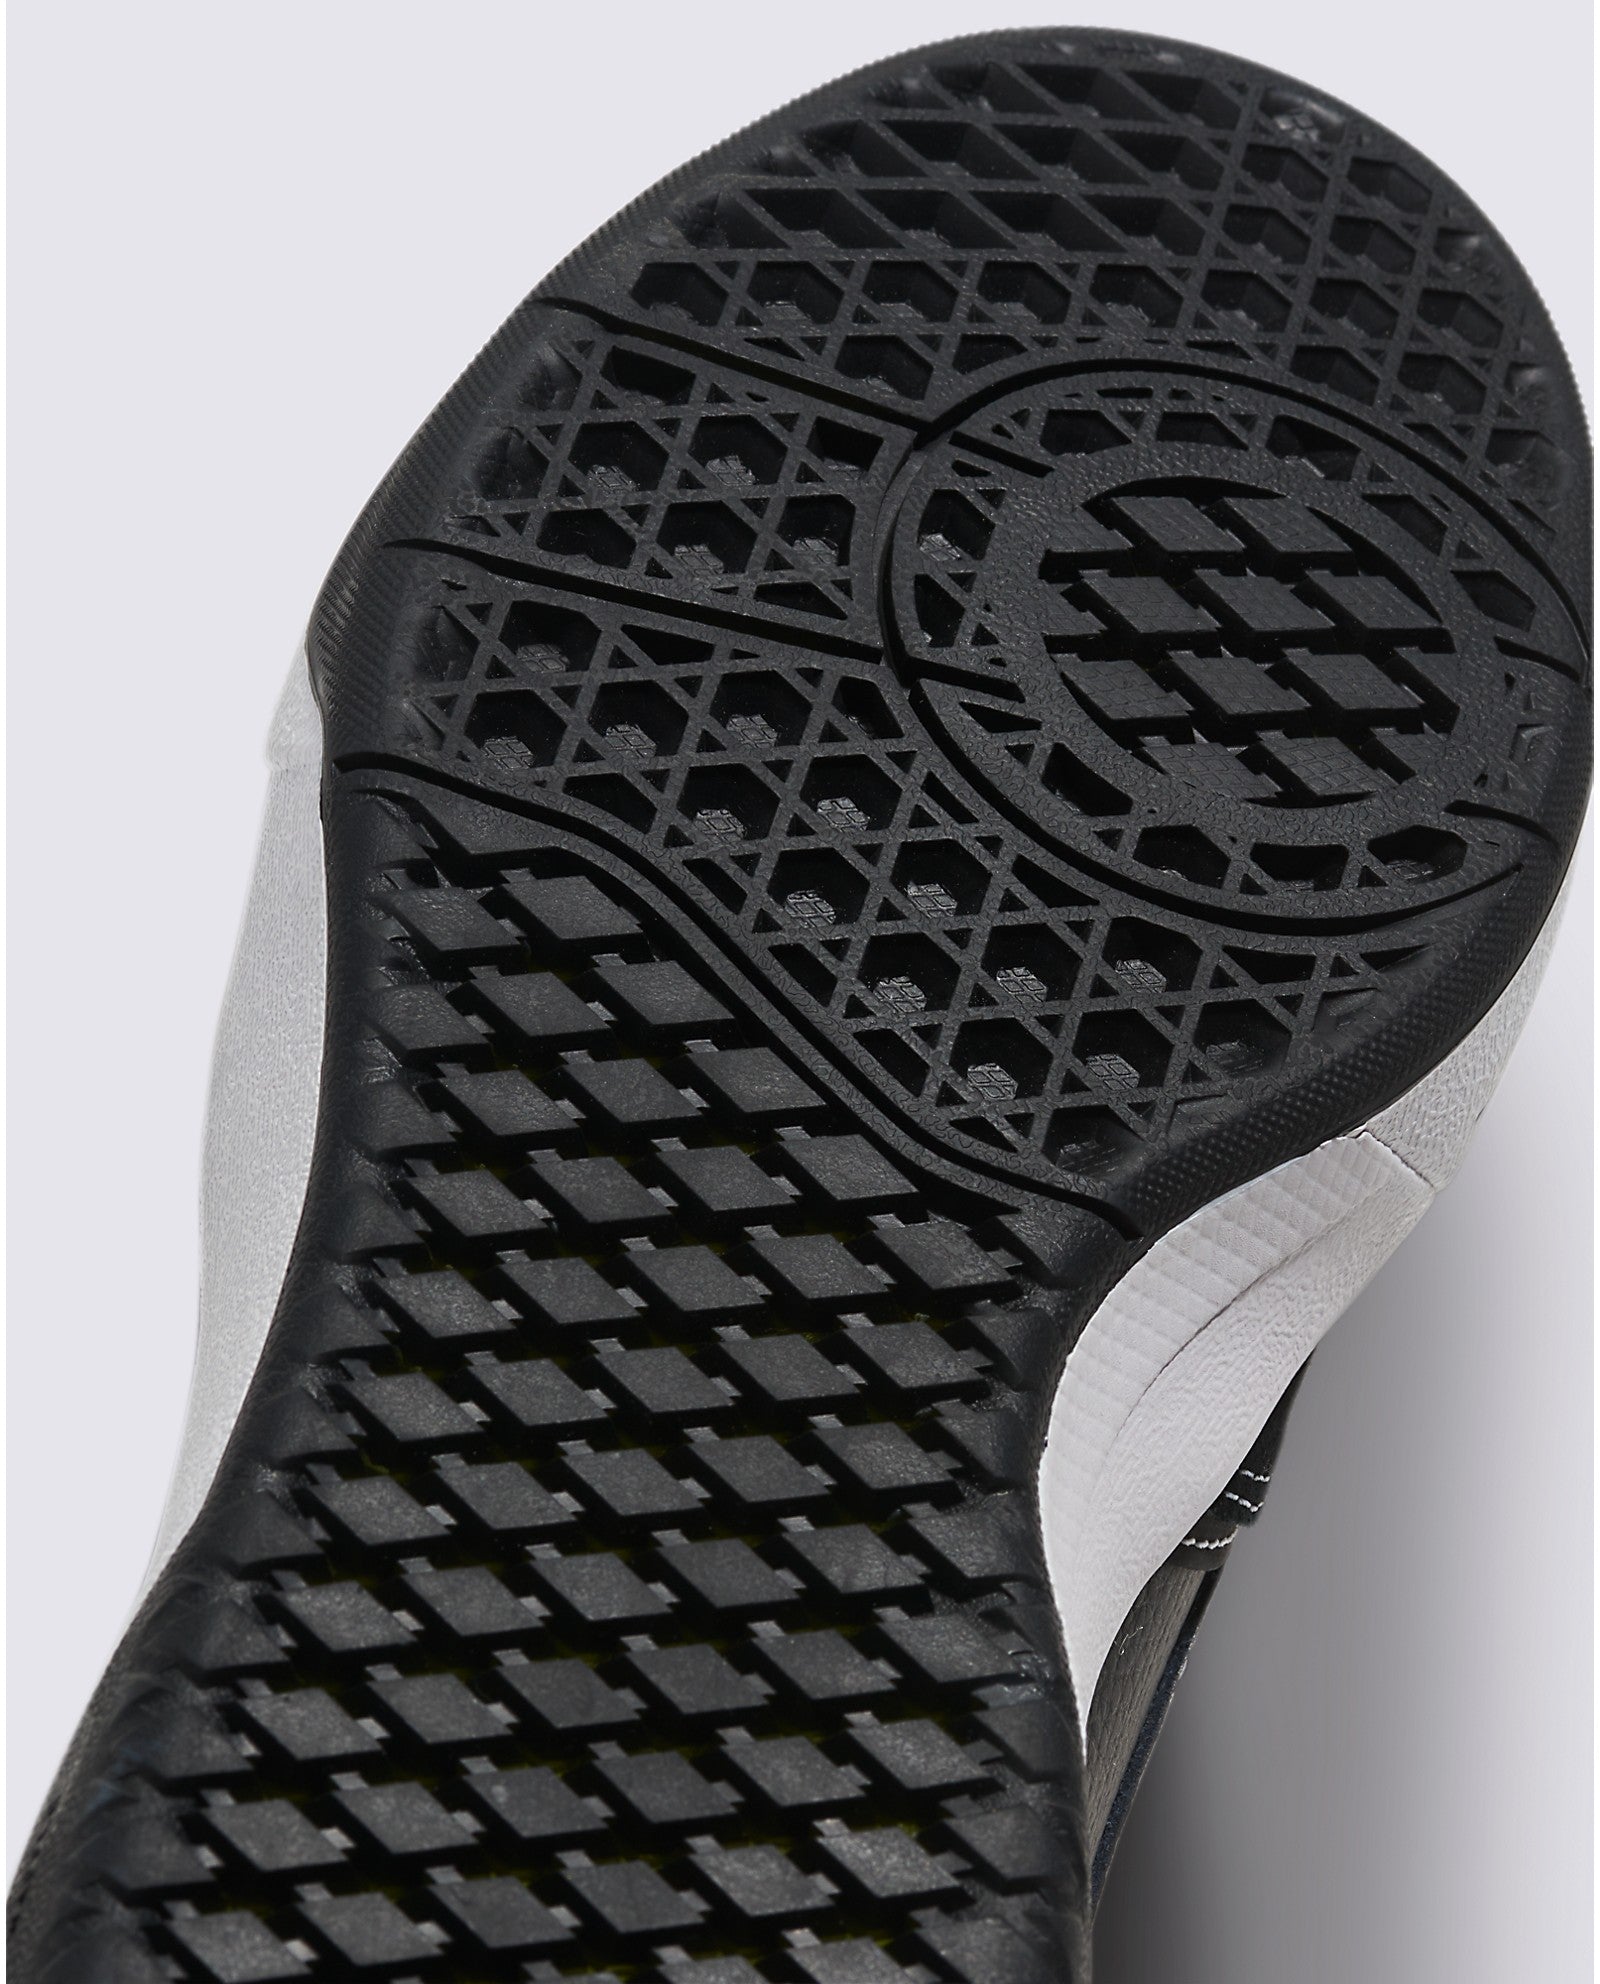 Black/White Rowan 2 Vans Skate Shoe Detail